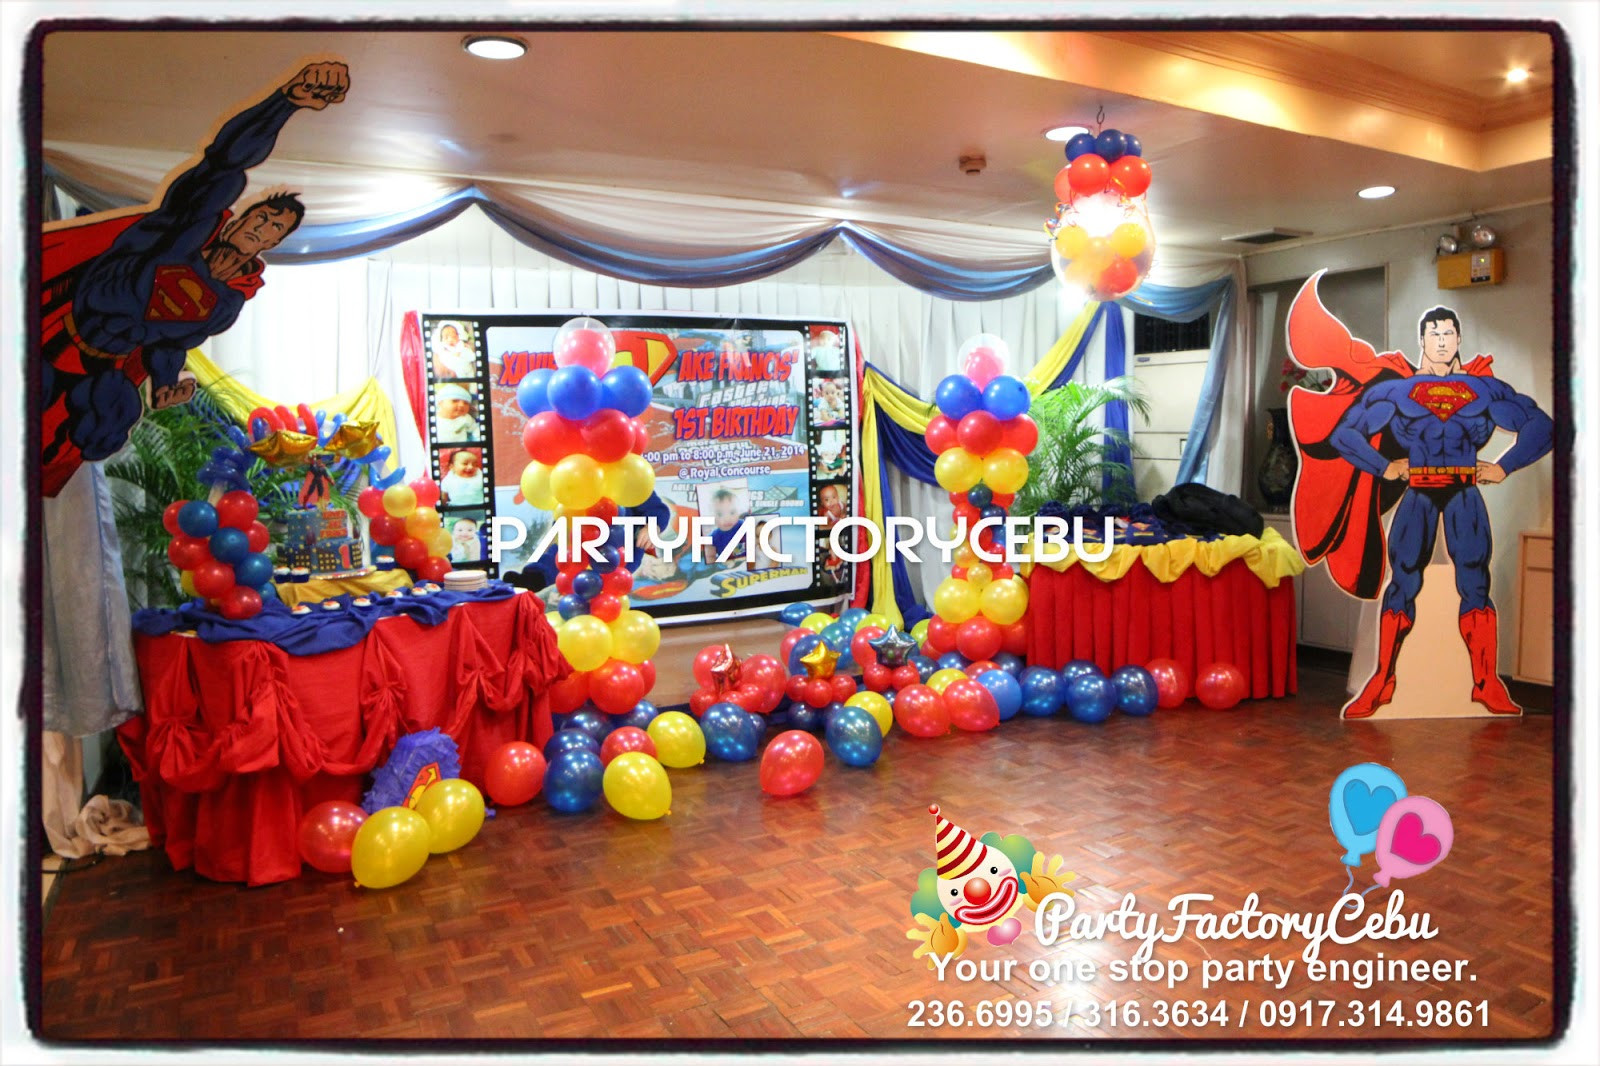 Superman Birthday Party Supplies
 Wel e to PartyFactory Cebu Jake Francis 1st Superman